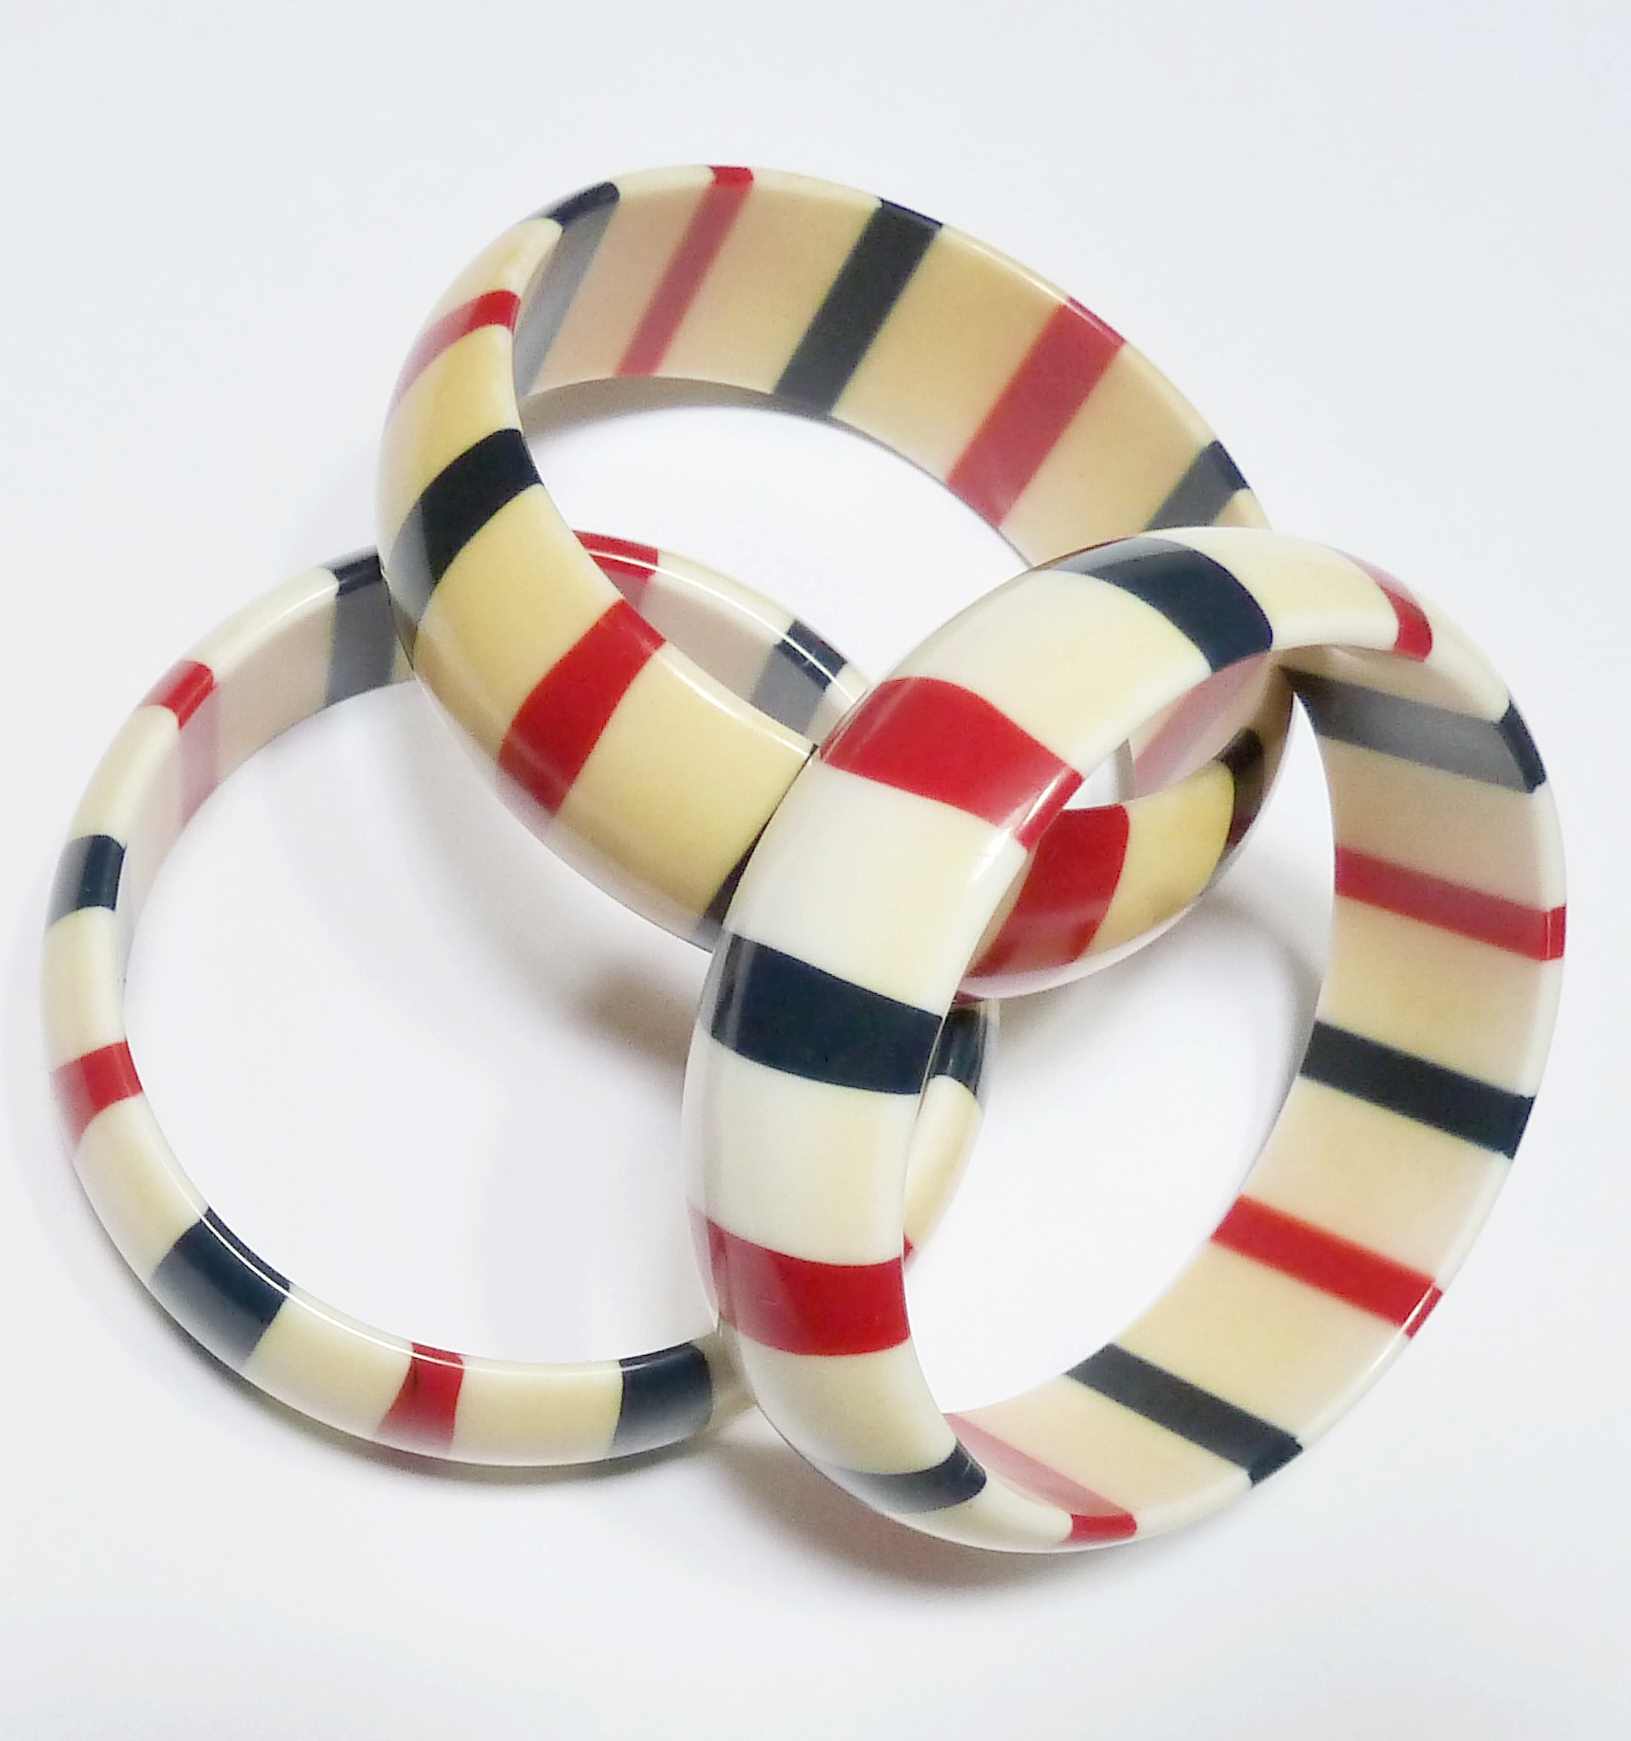 3 striped bakelite bangles